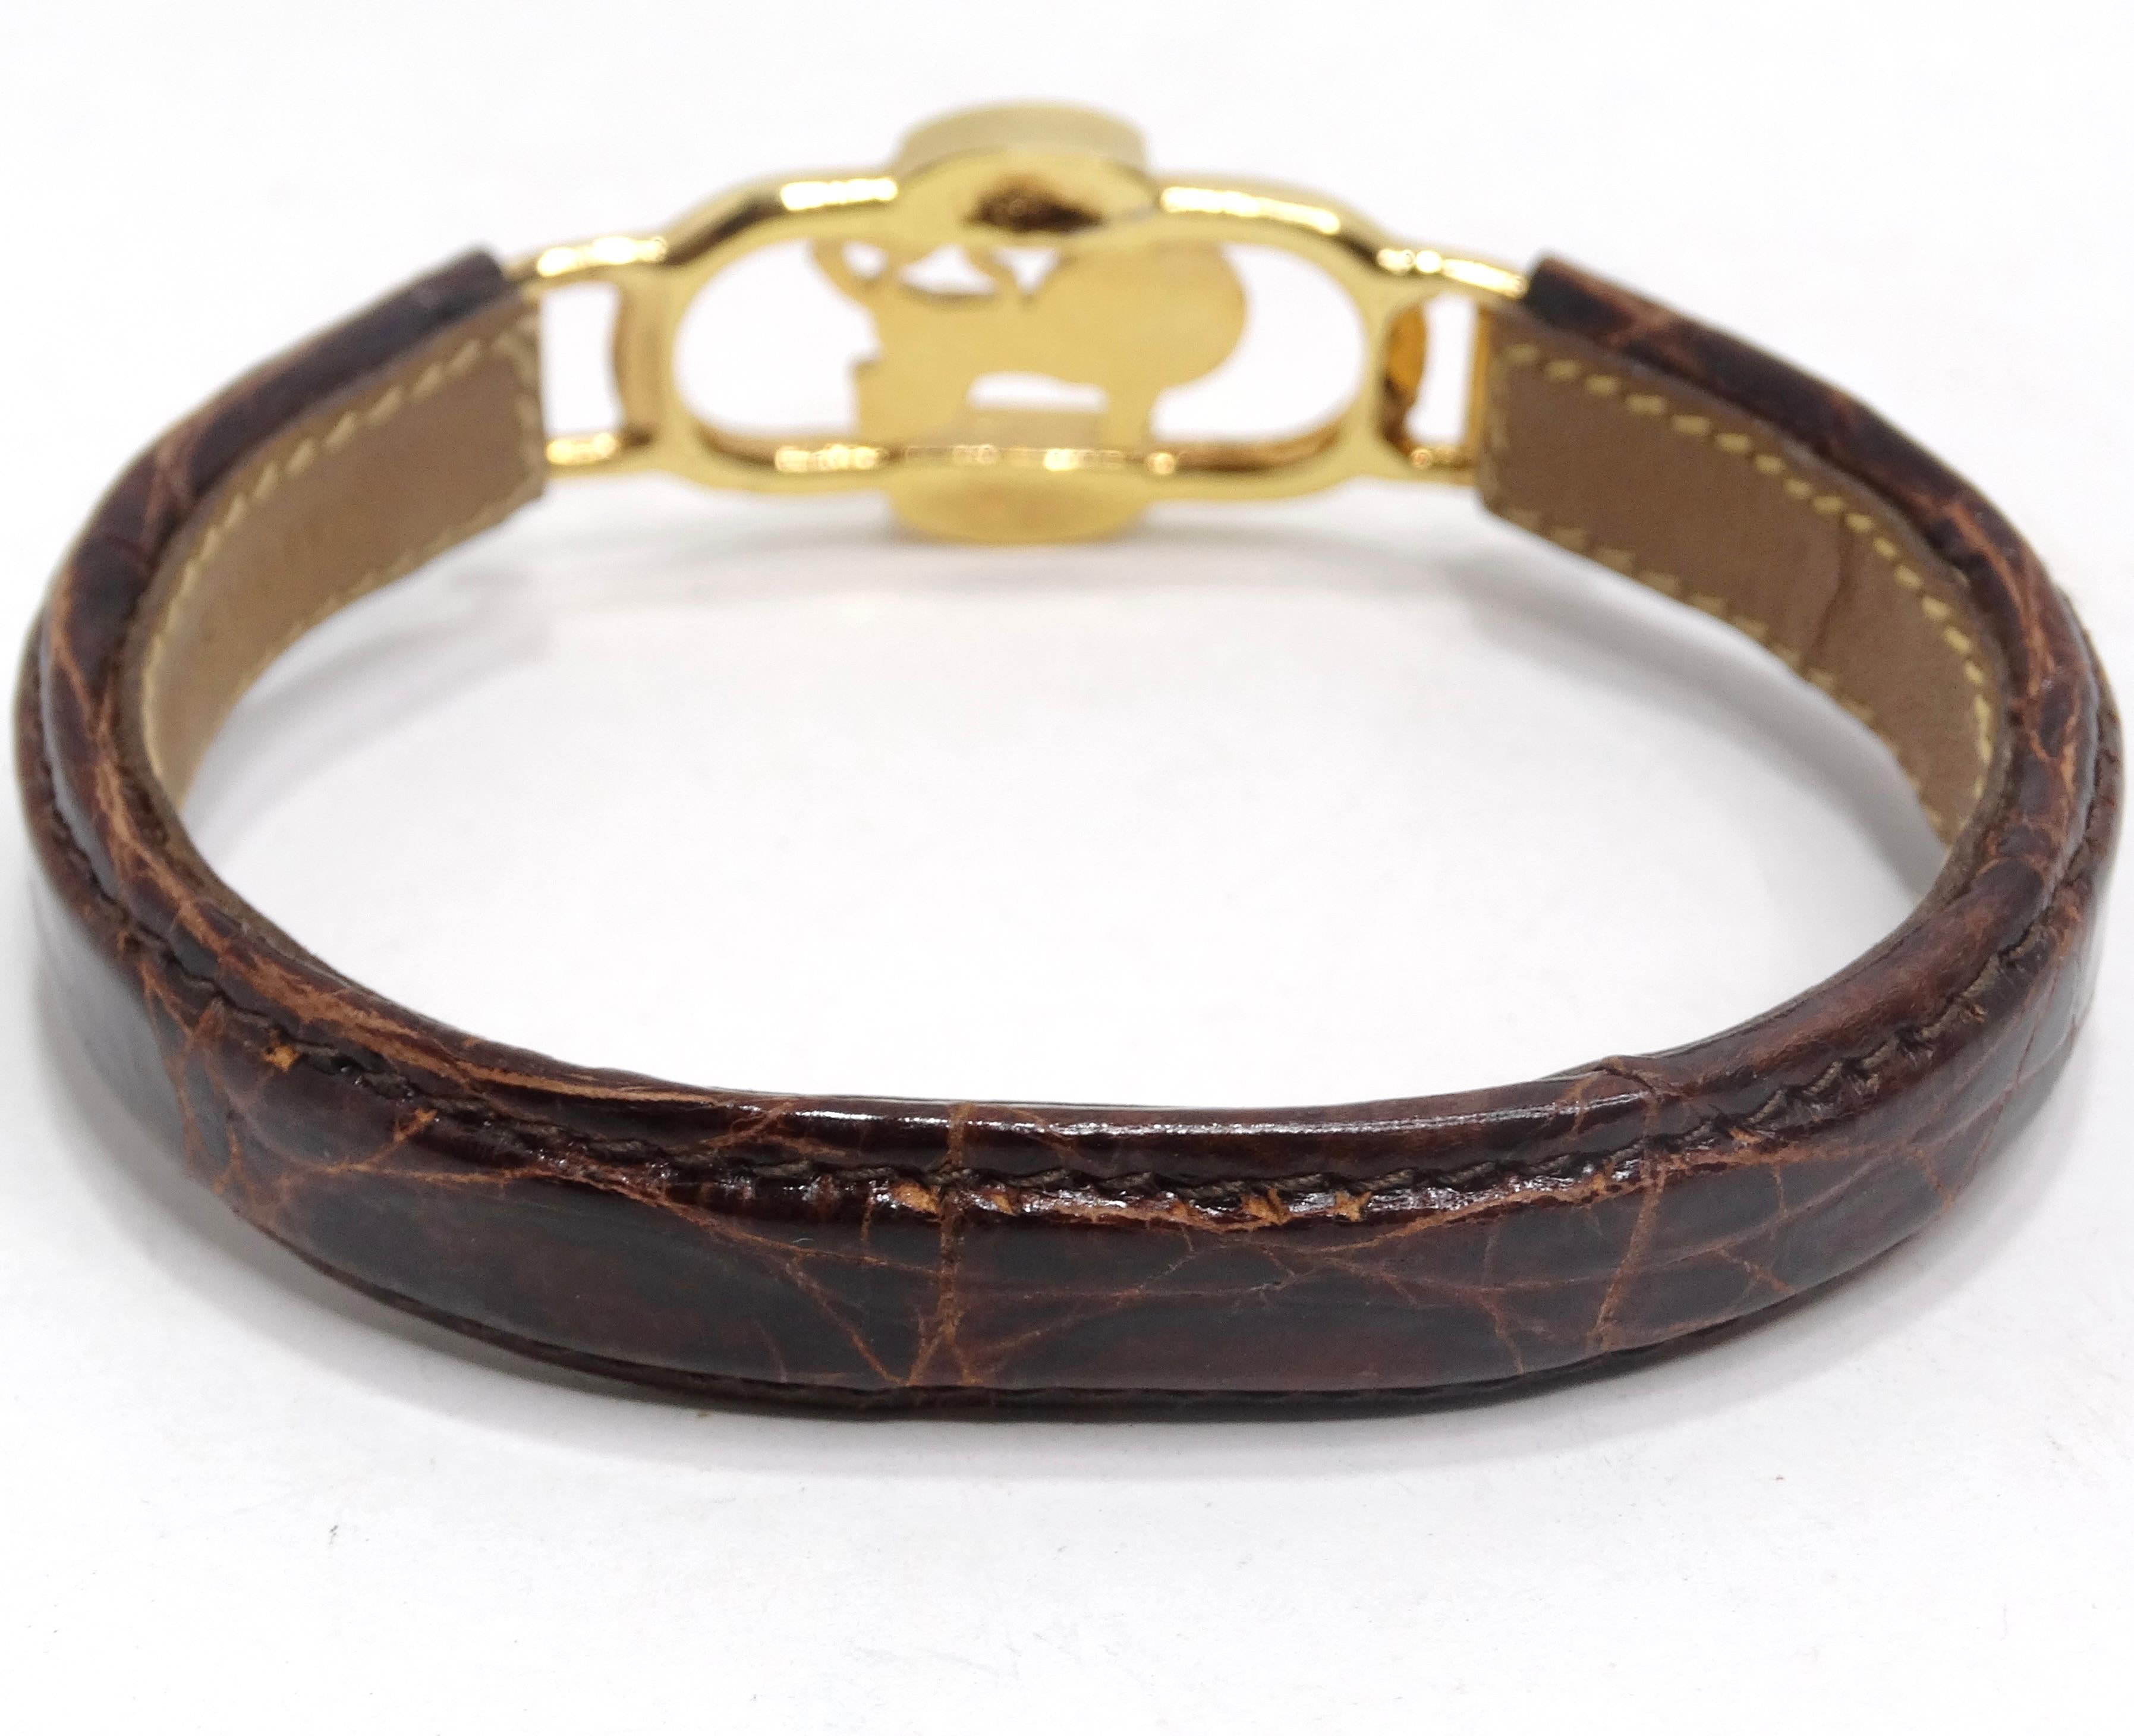 Celine 1990s Gold Tone Horse Emblem Leather Bracelet In Excellent Condition For Sale In Scottsdale, AZ